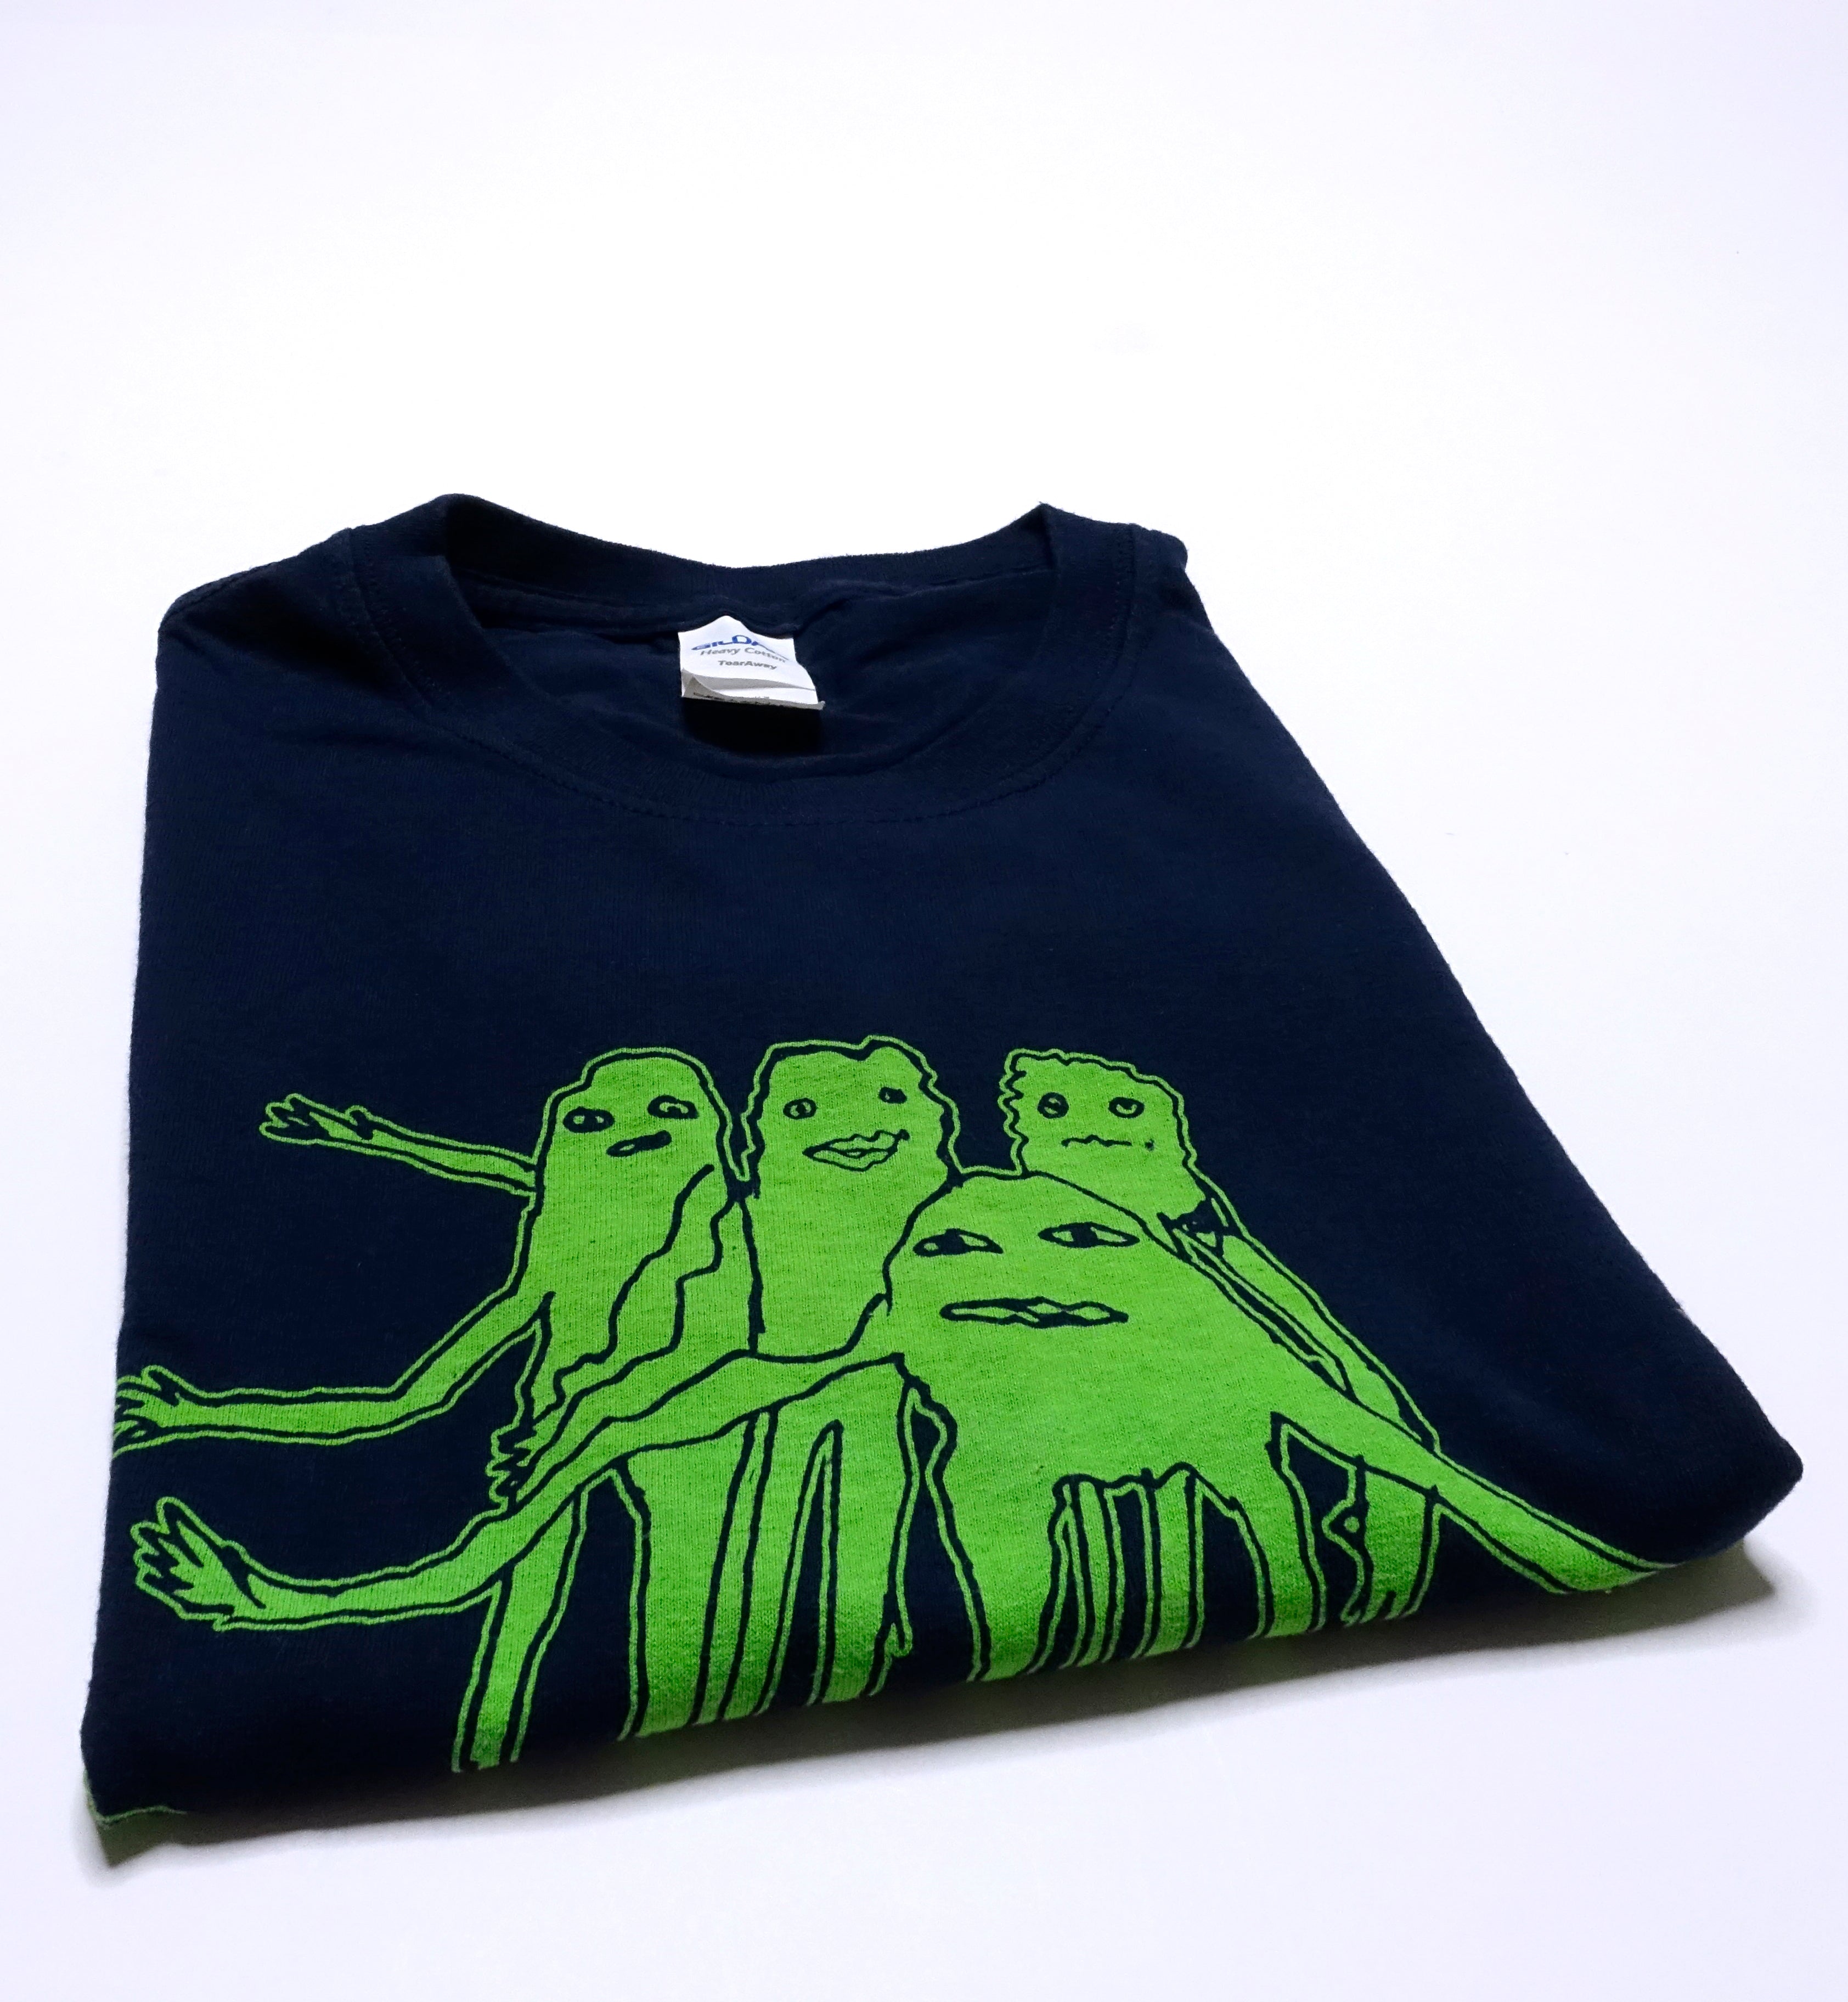 Dinosaur Jr.  ‎– Maloney Skateboarders Tour Shirt Size XL